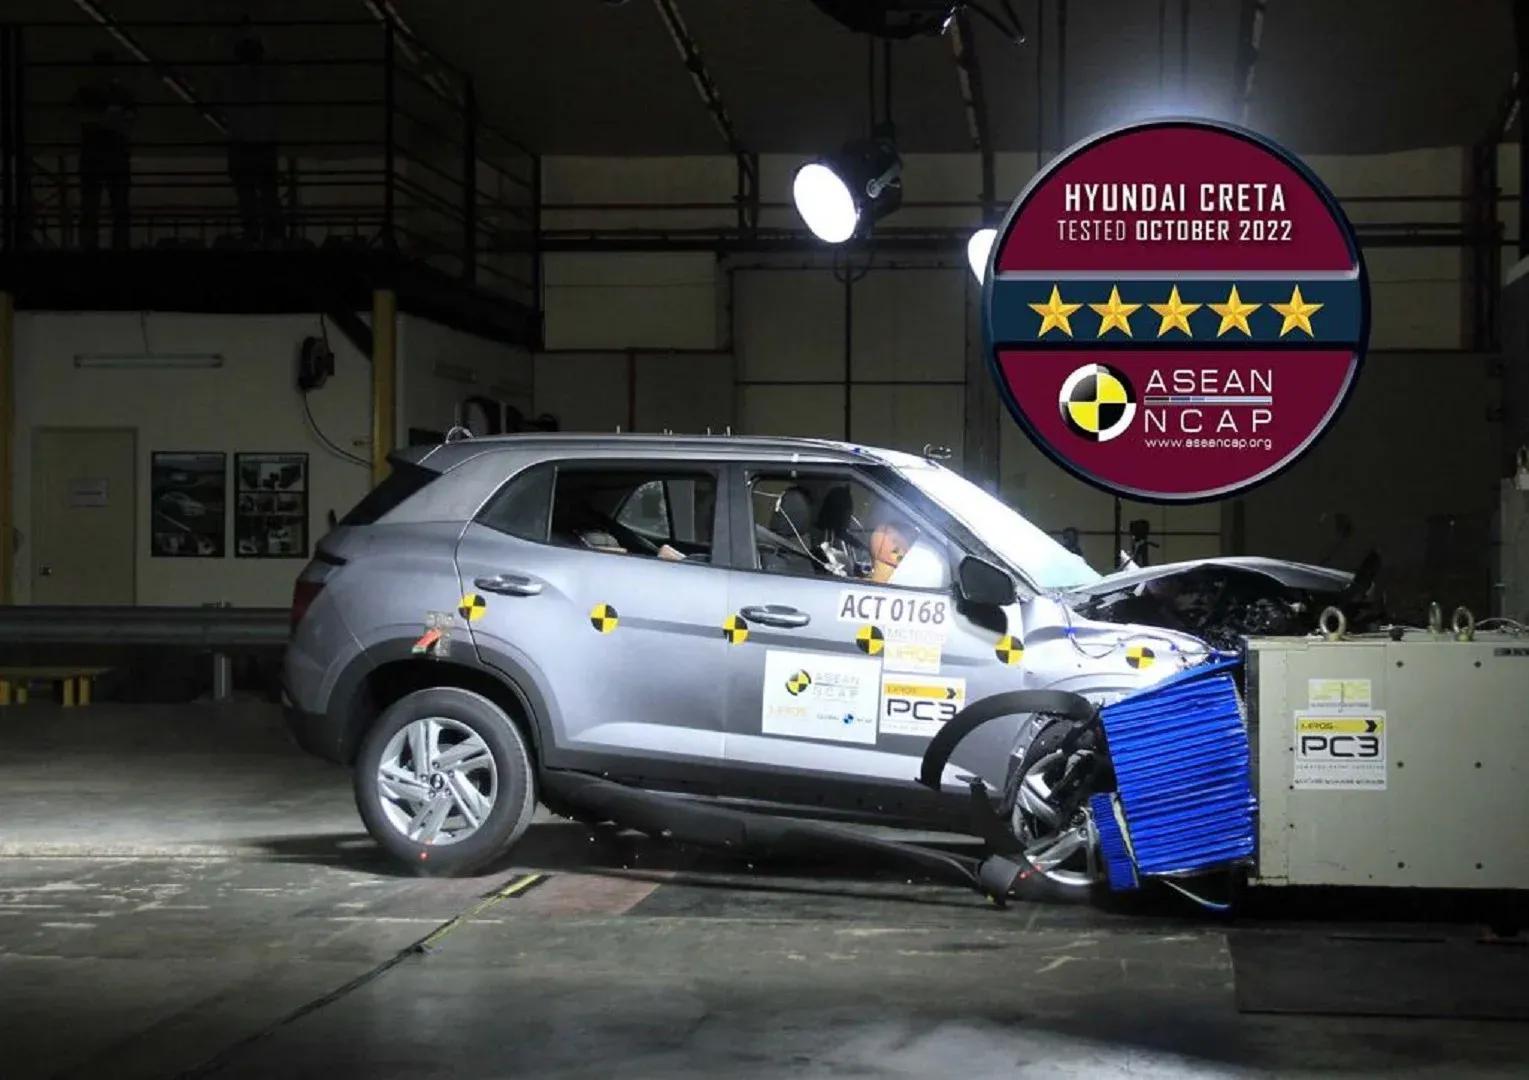 2023 Hyundai Creta received 5-star rating in ASEAN NCAP Crash Tests